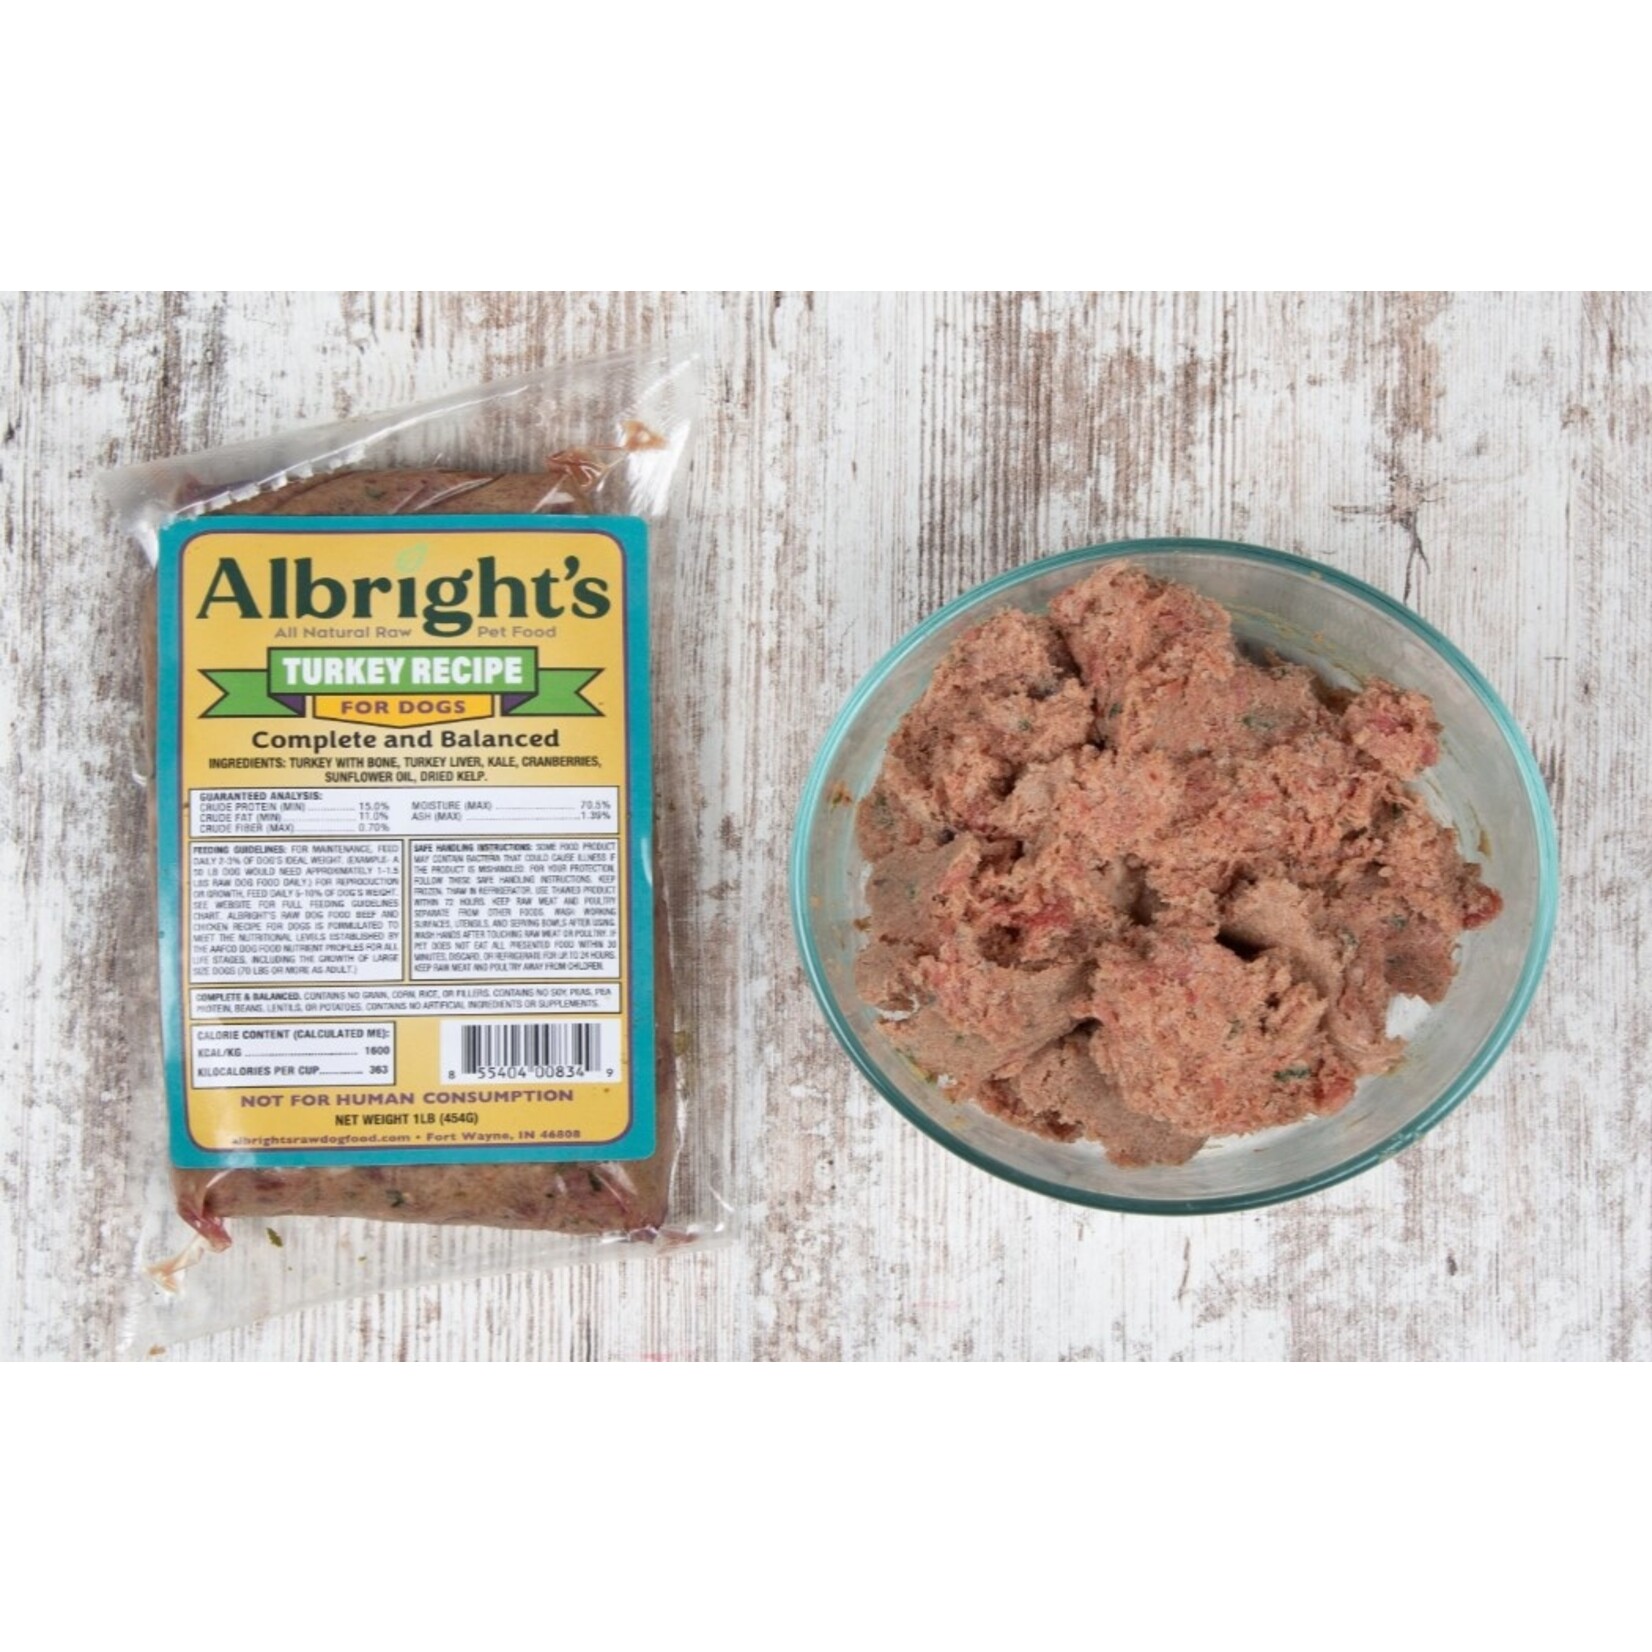 Albrights Albright’s Frozen Raw Dog Food Turkey Recipe